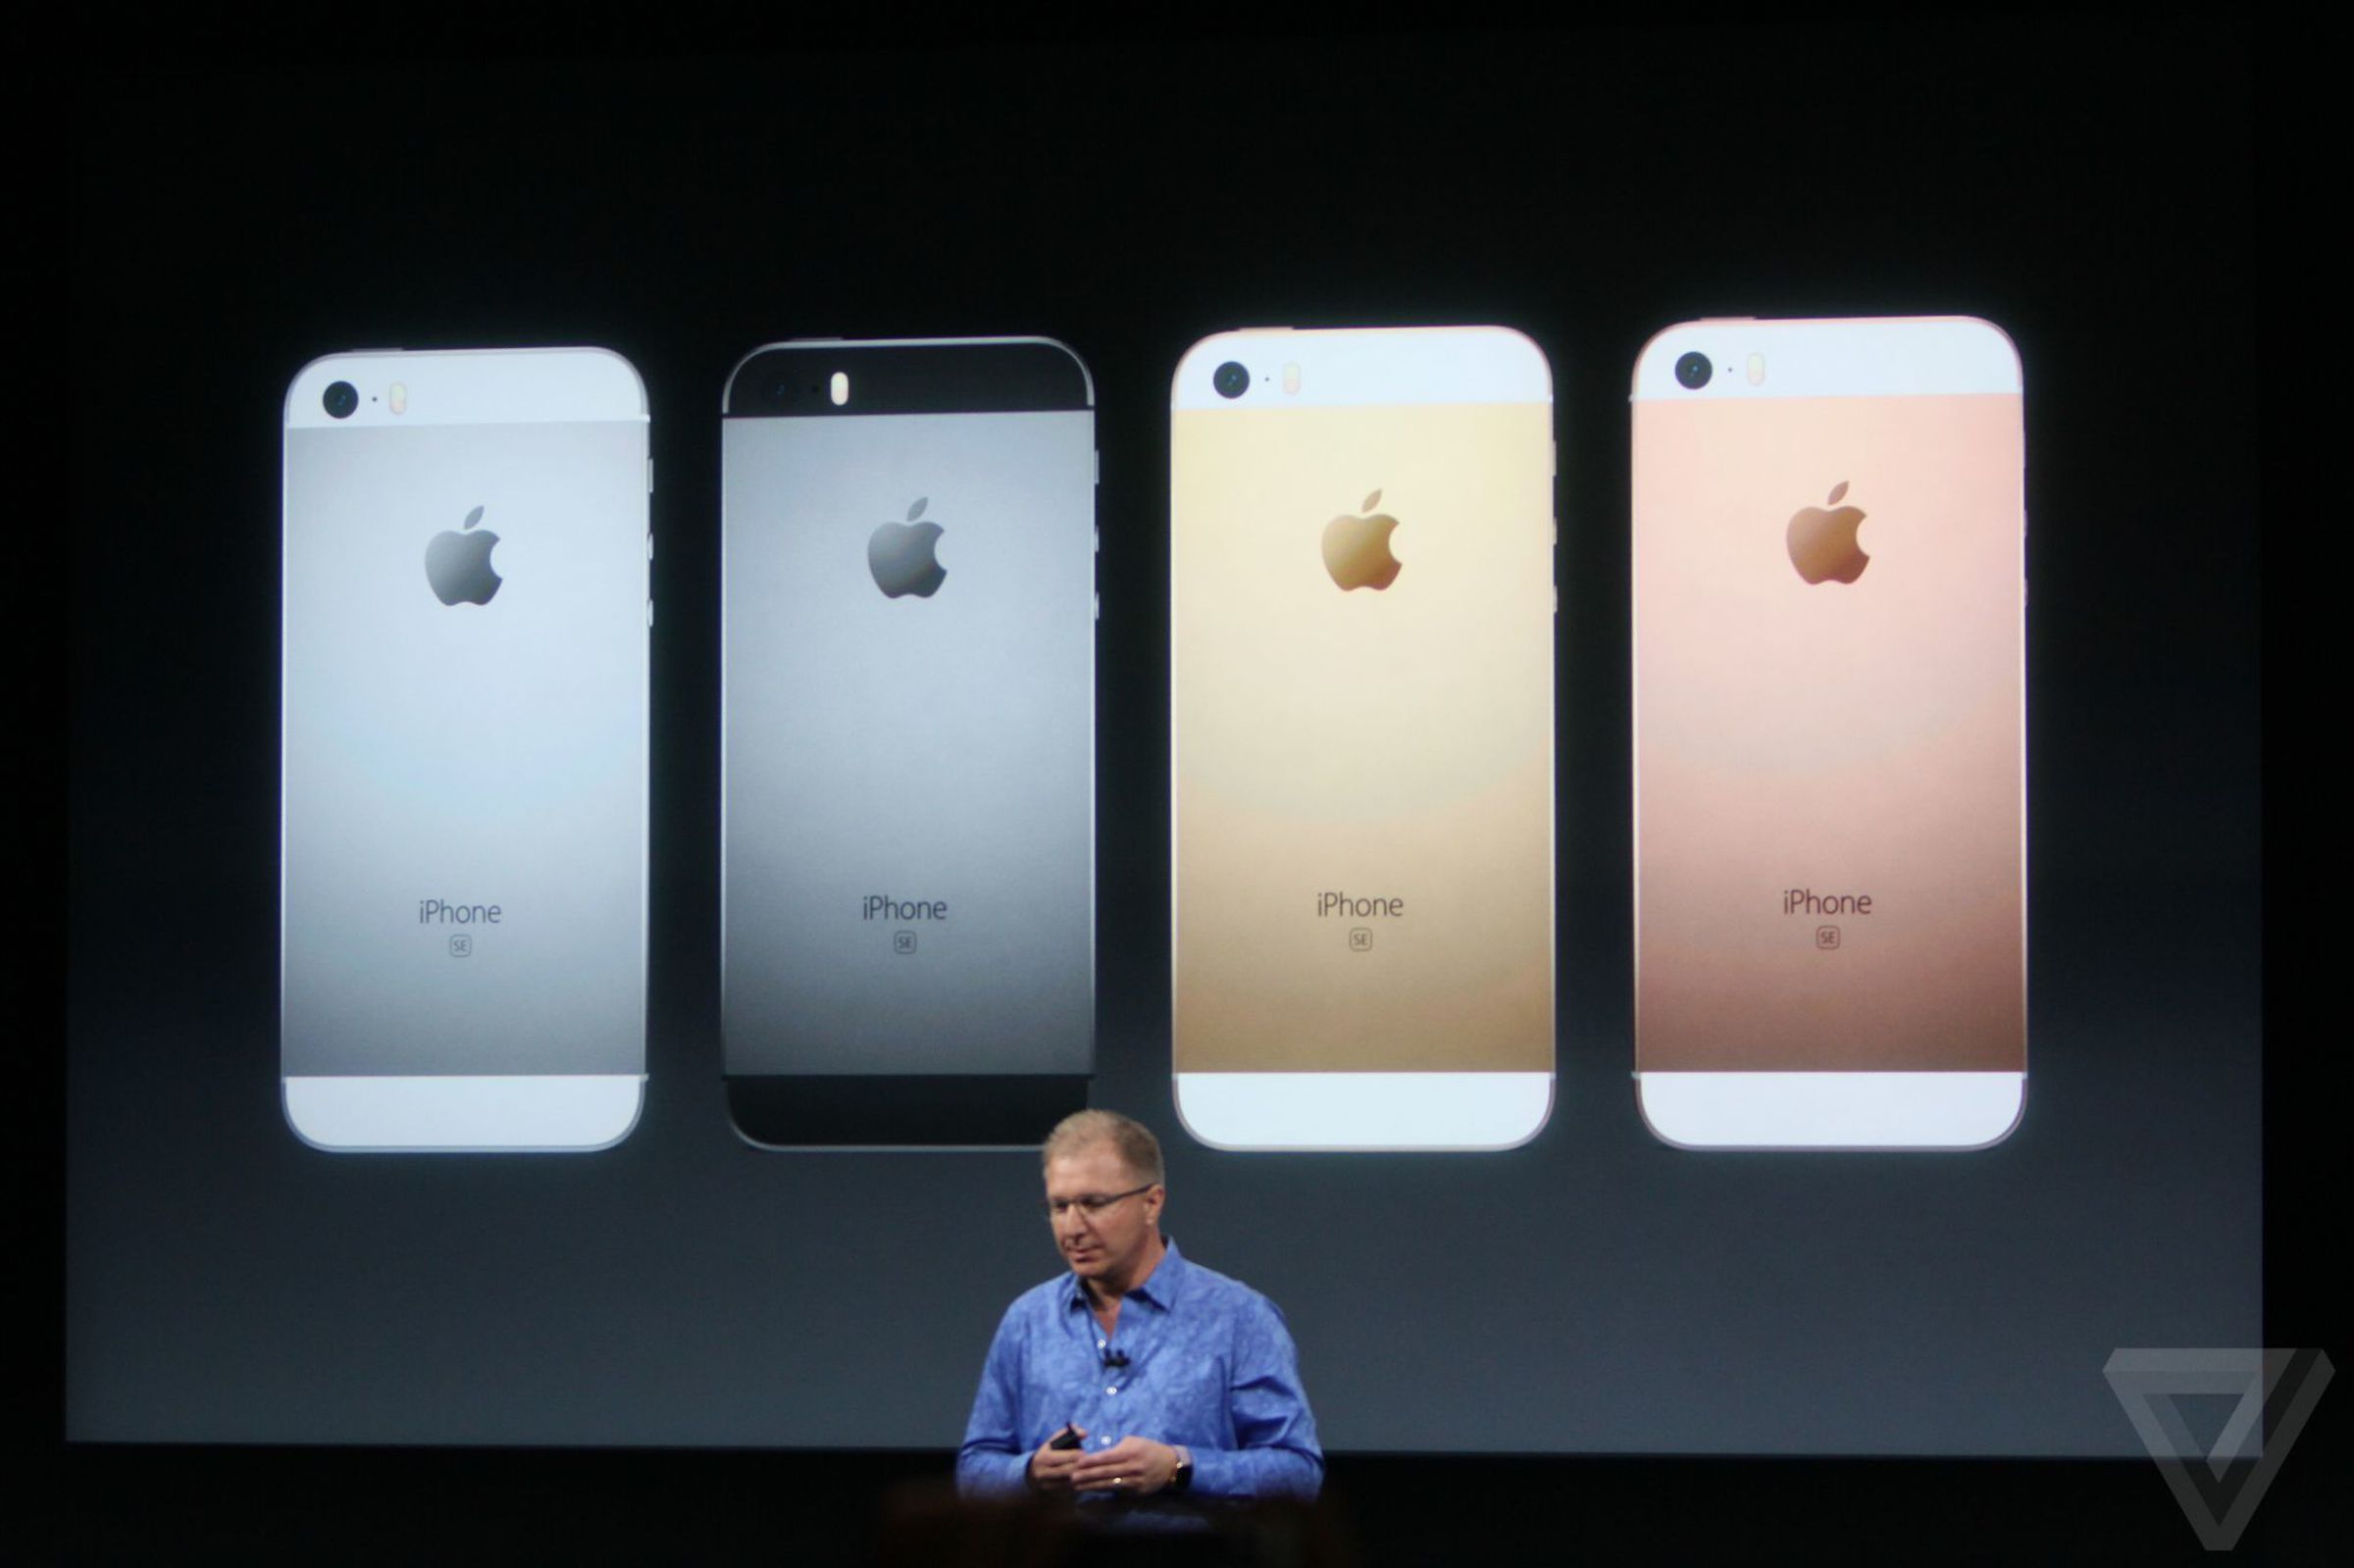 Apple iPhone SE announcement photos